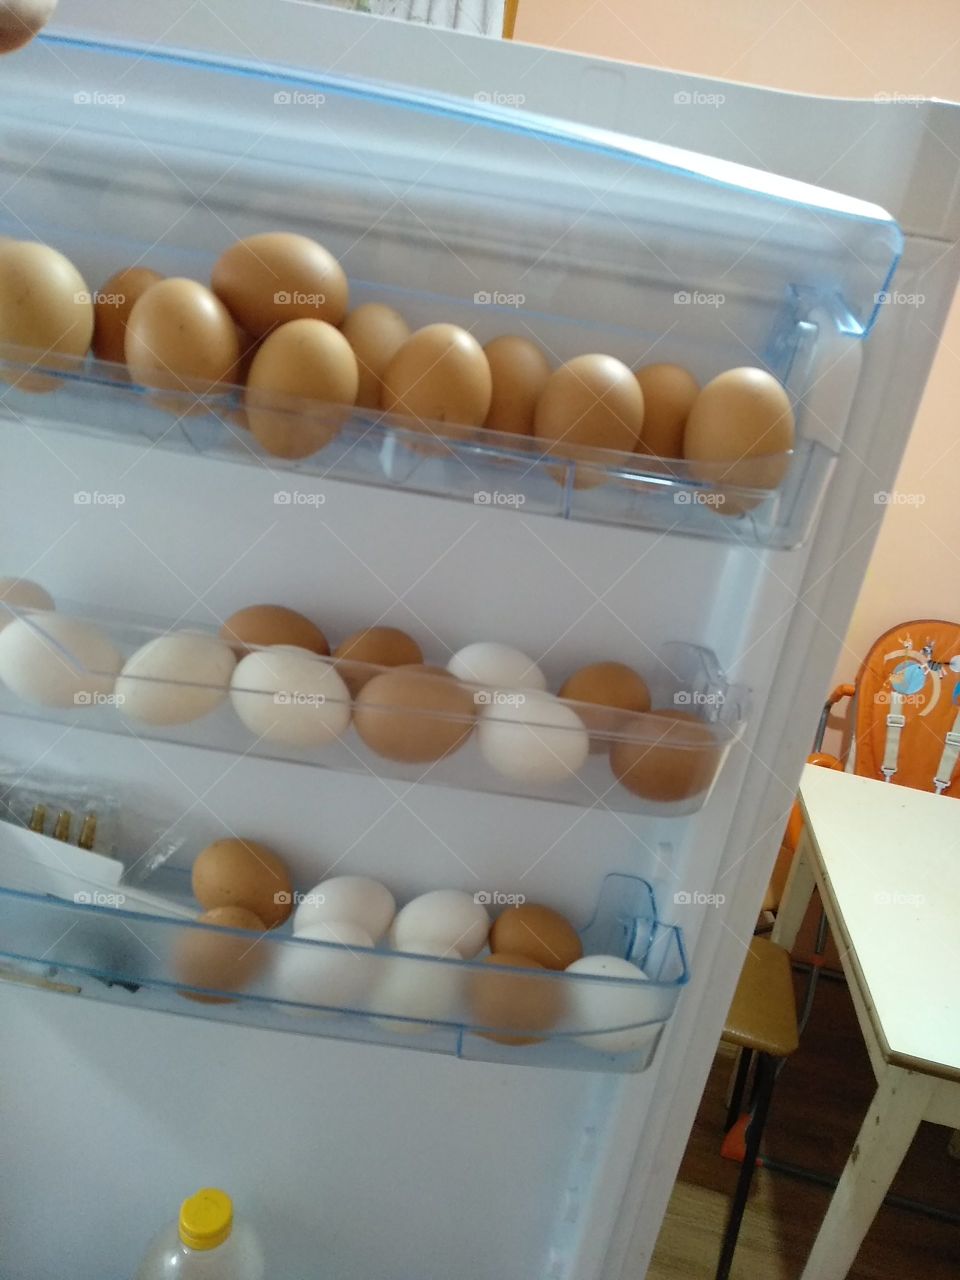 Eggs...too many eggs. I like farm eggs.